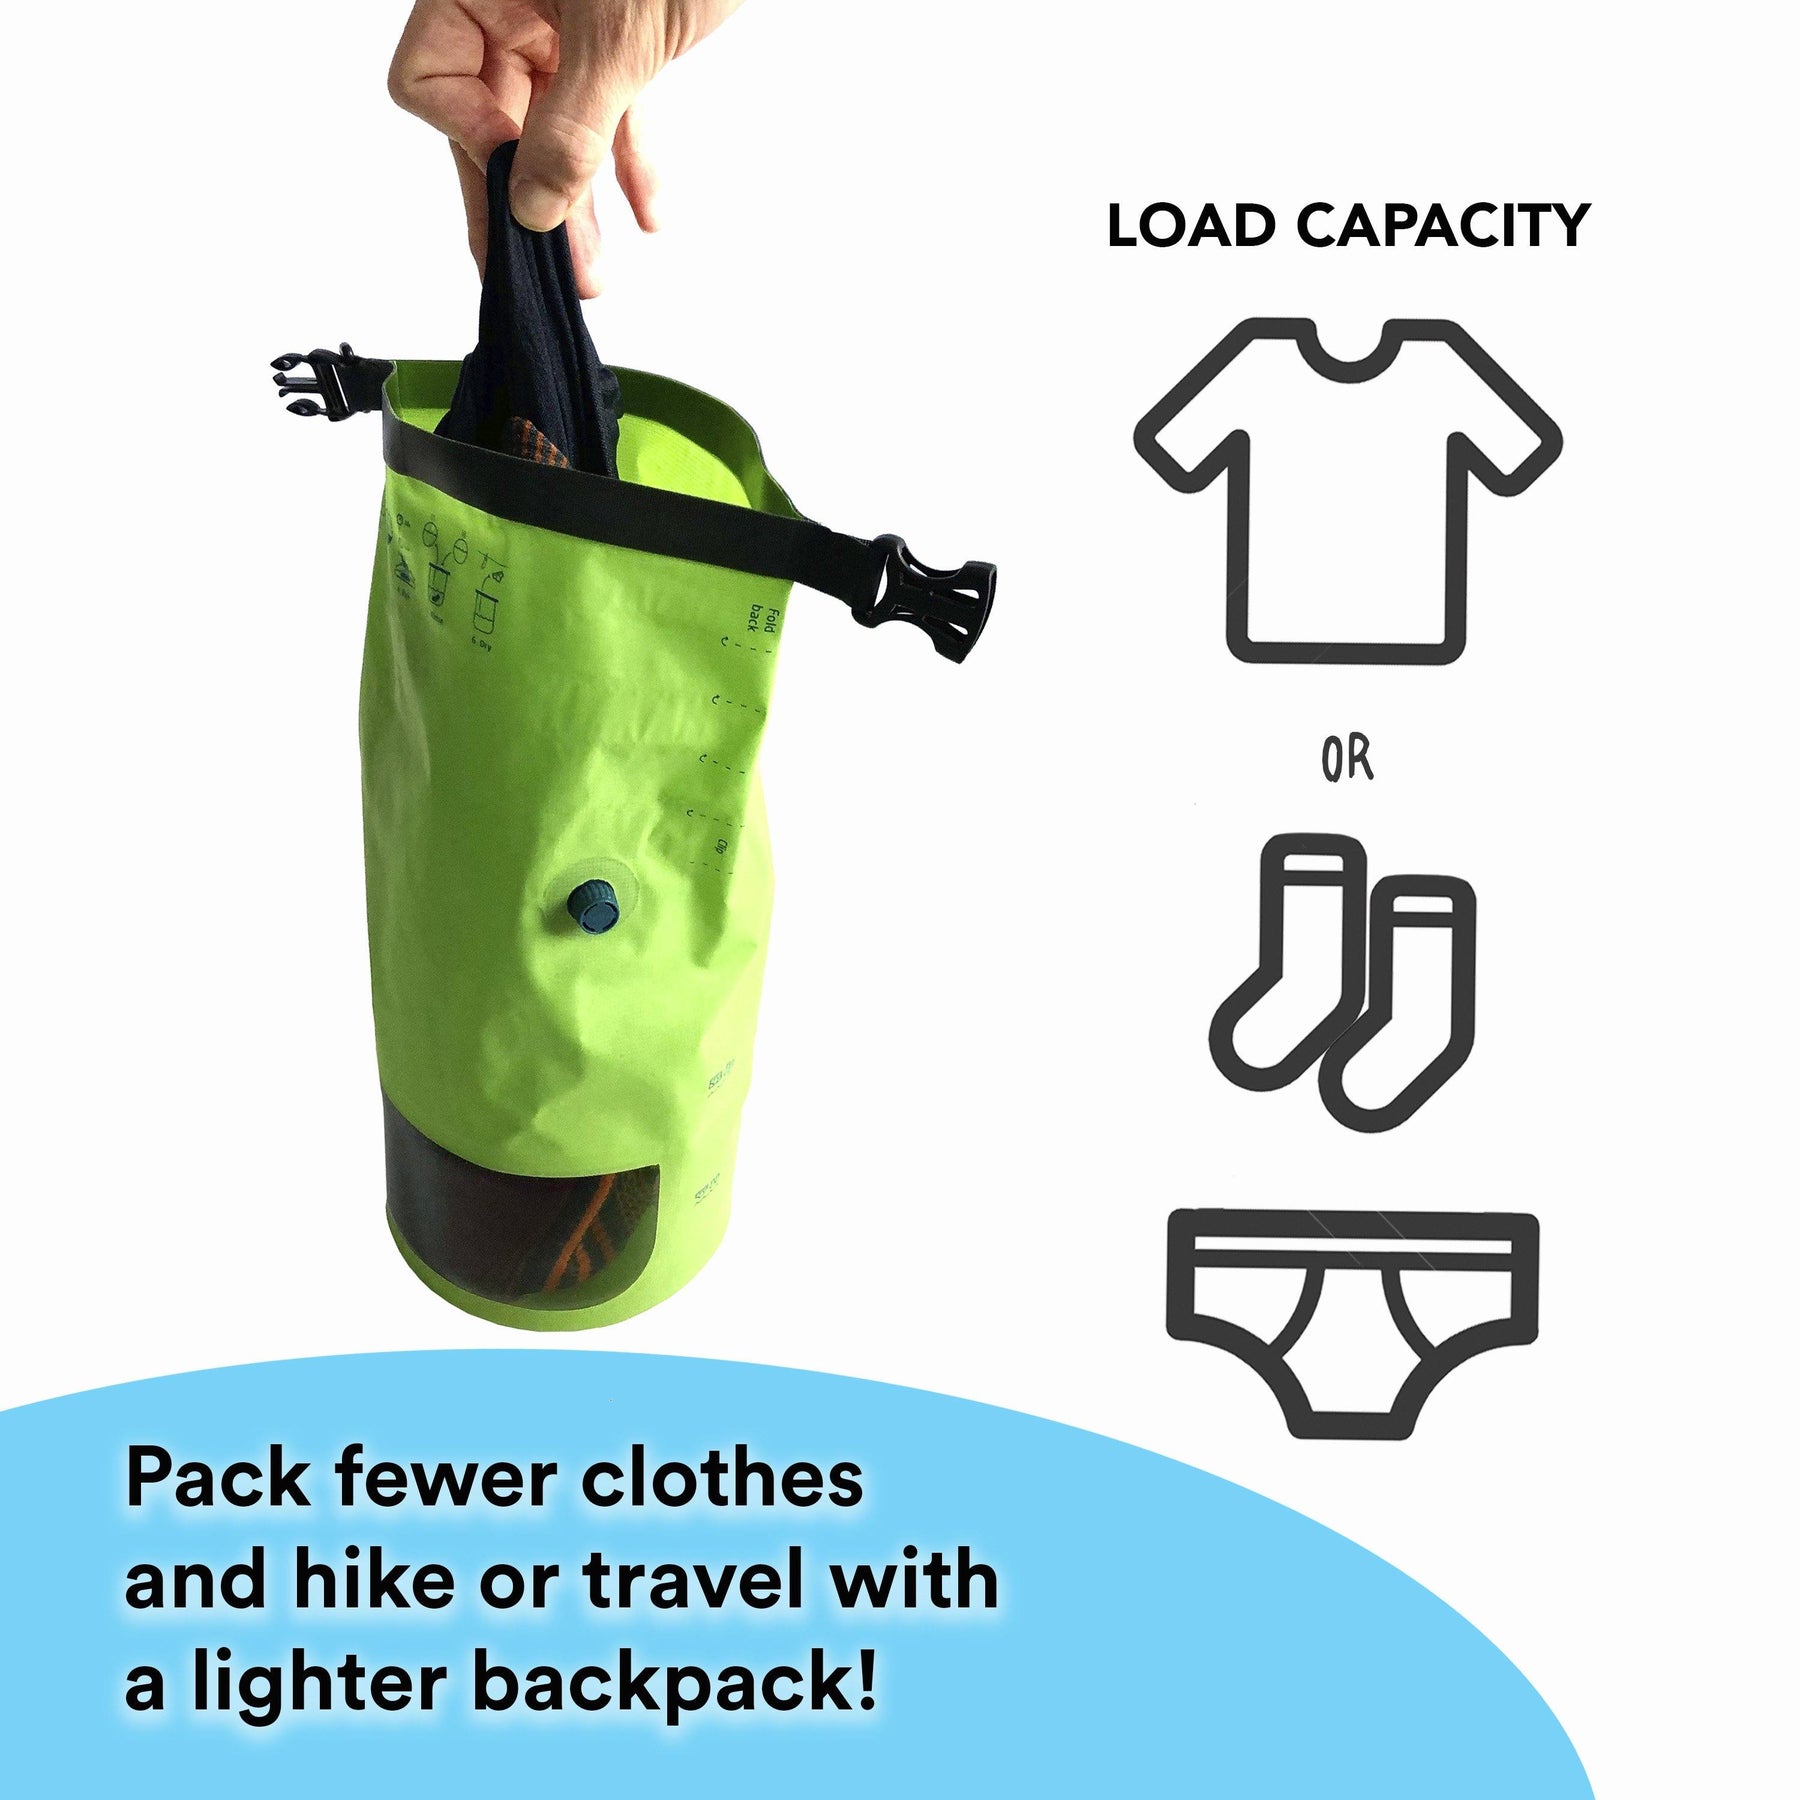 Scrubba Wash Bag MINI - portable travel & camp washing machine